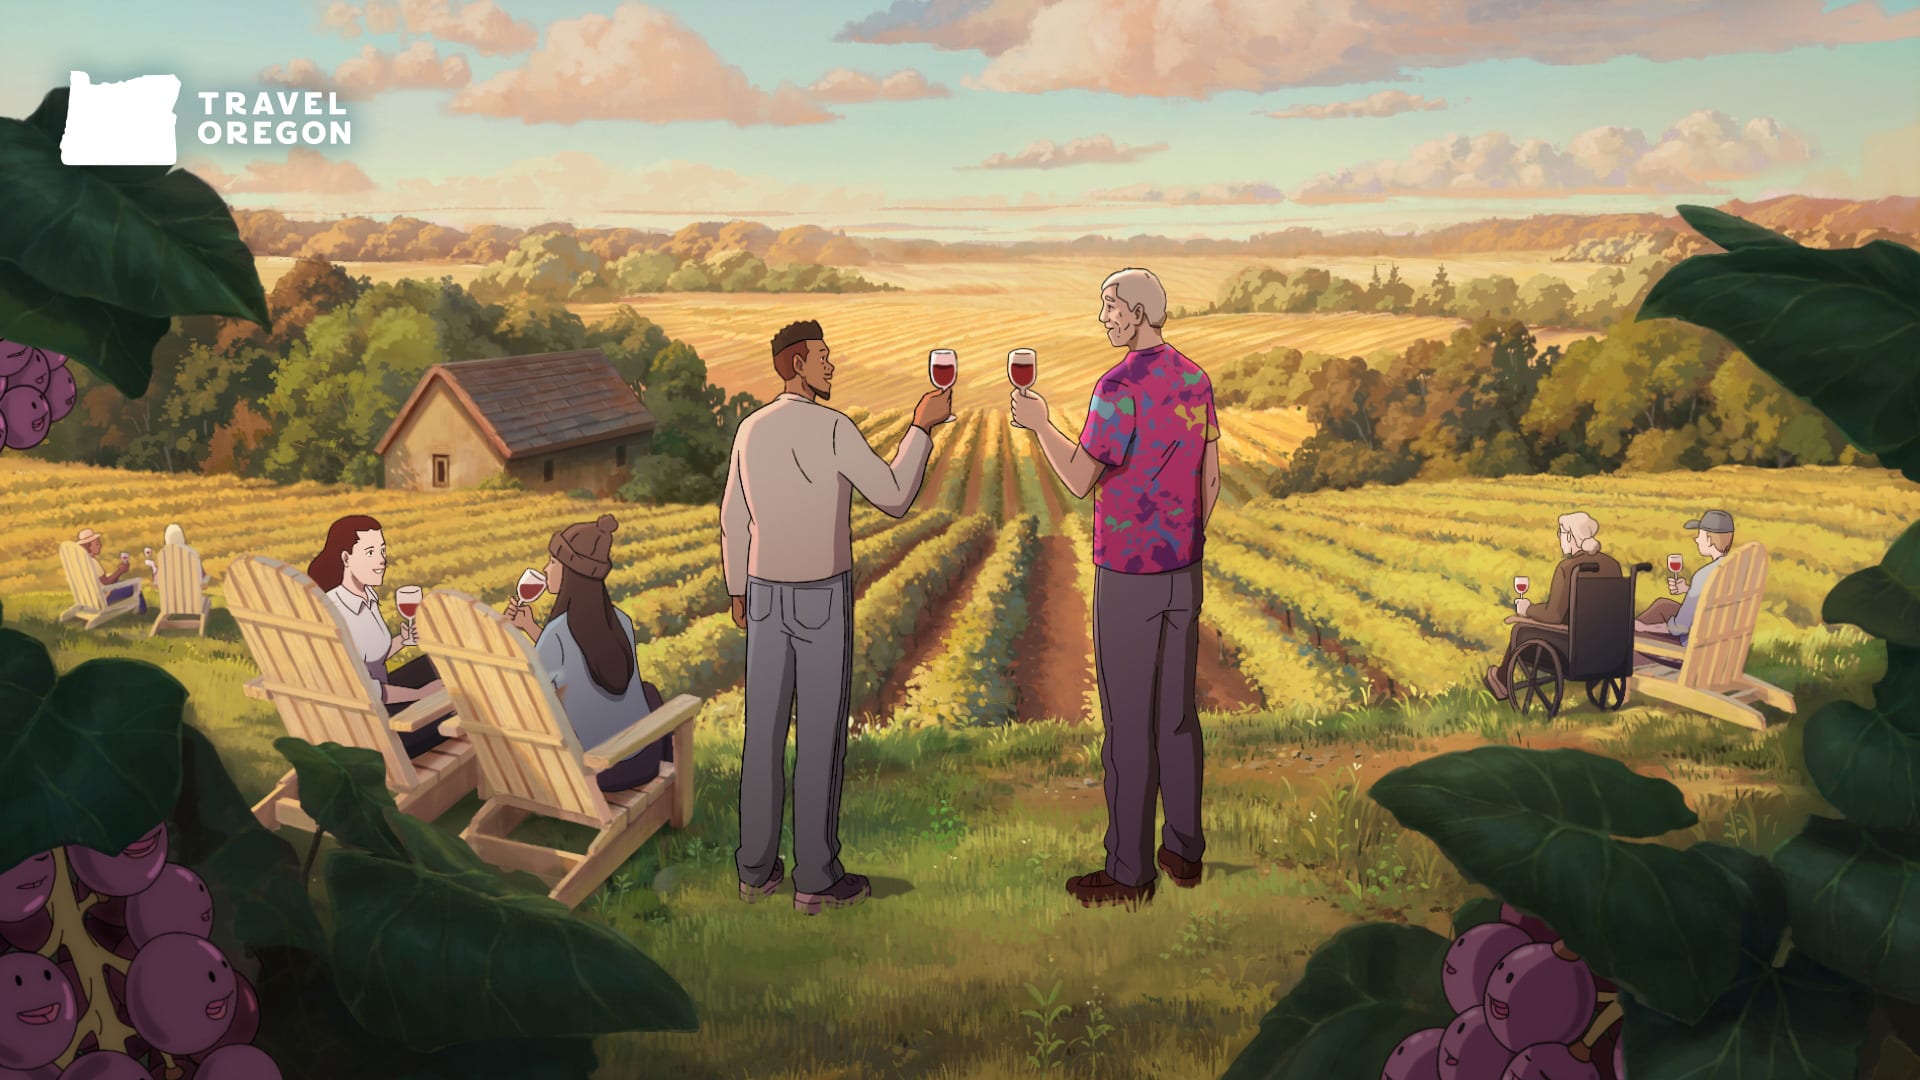 Illustration of two people enjoying wine in a vineyard.